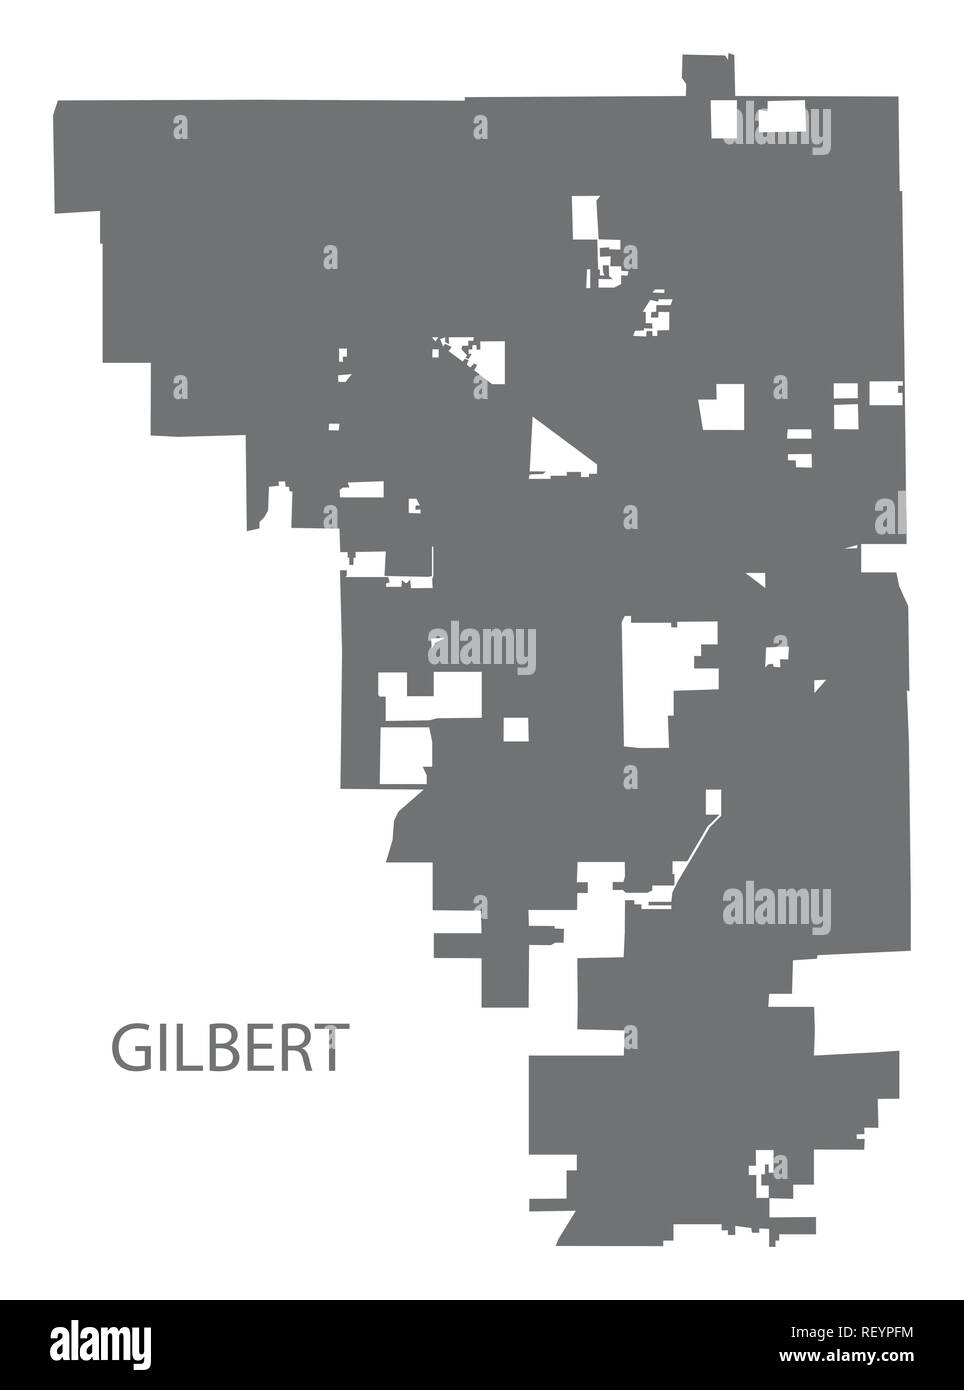 Gilbert Arizona city map grey illustration silhouette Stock Vector